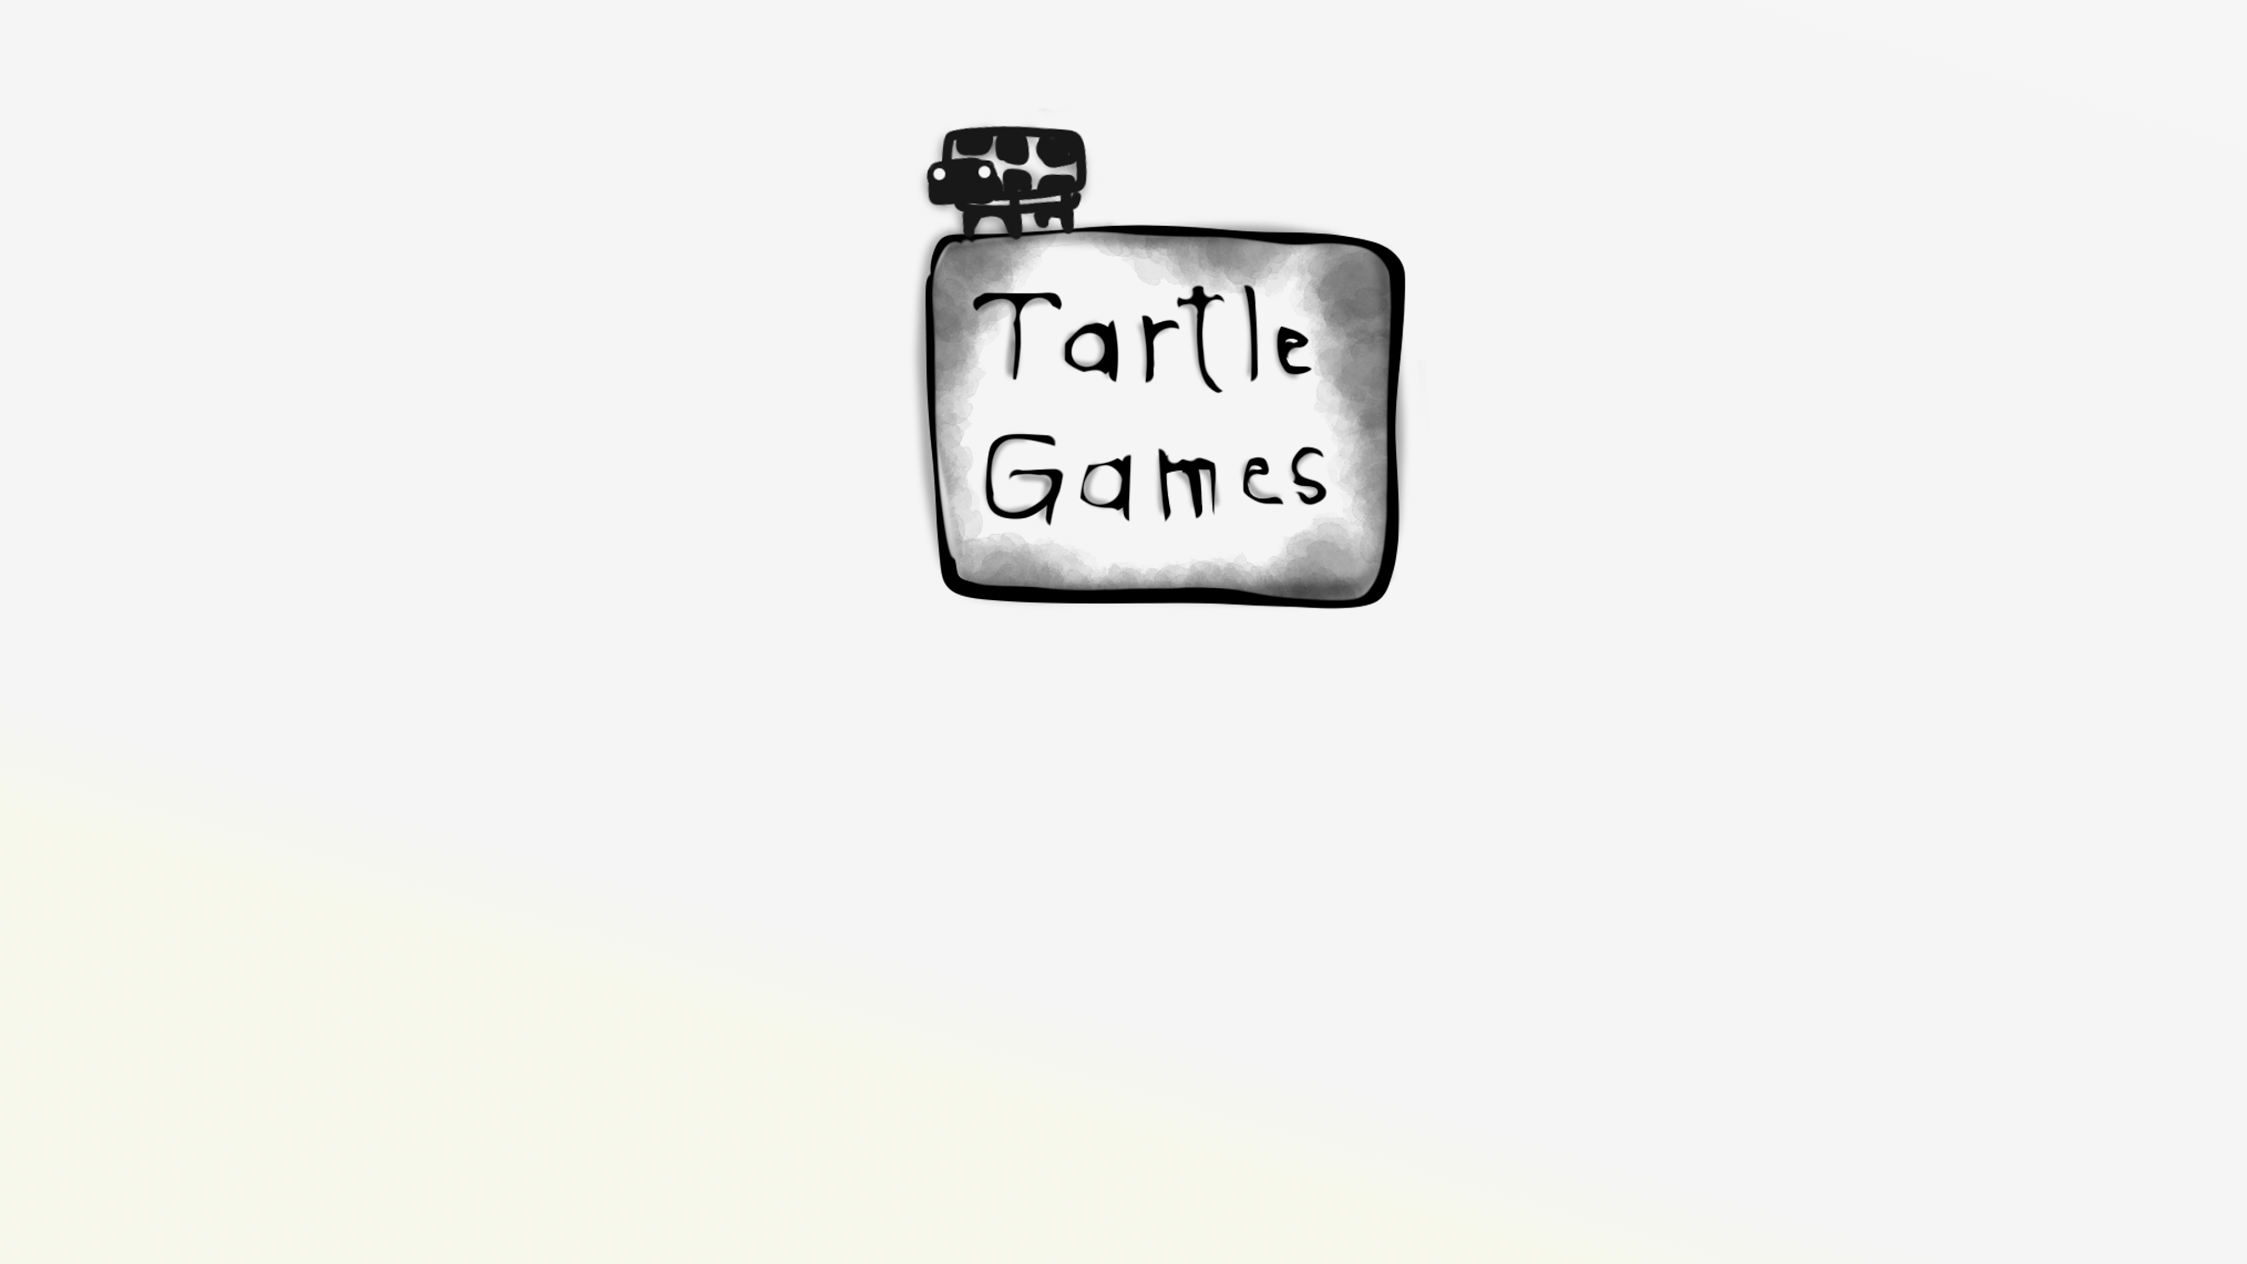 Tartle Games